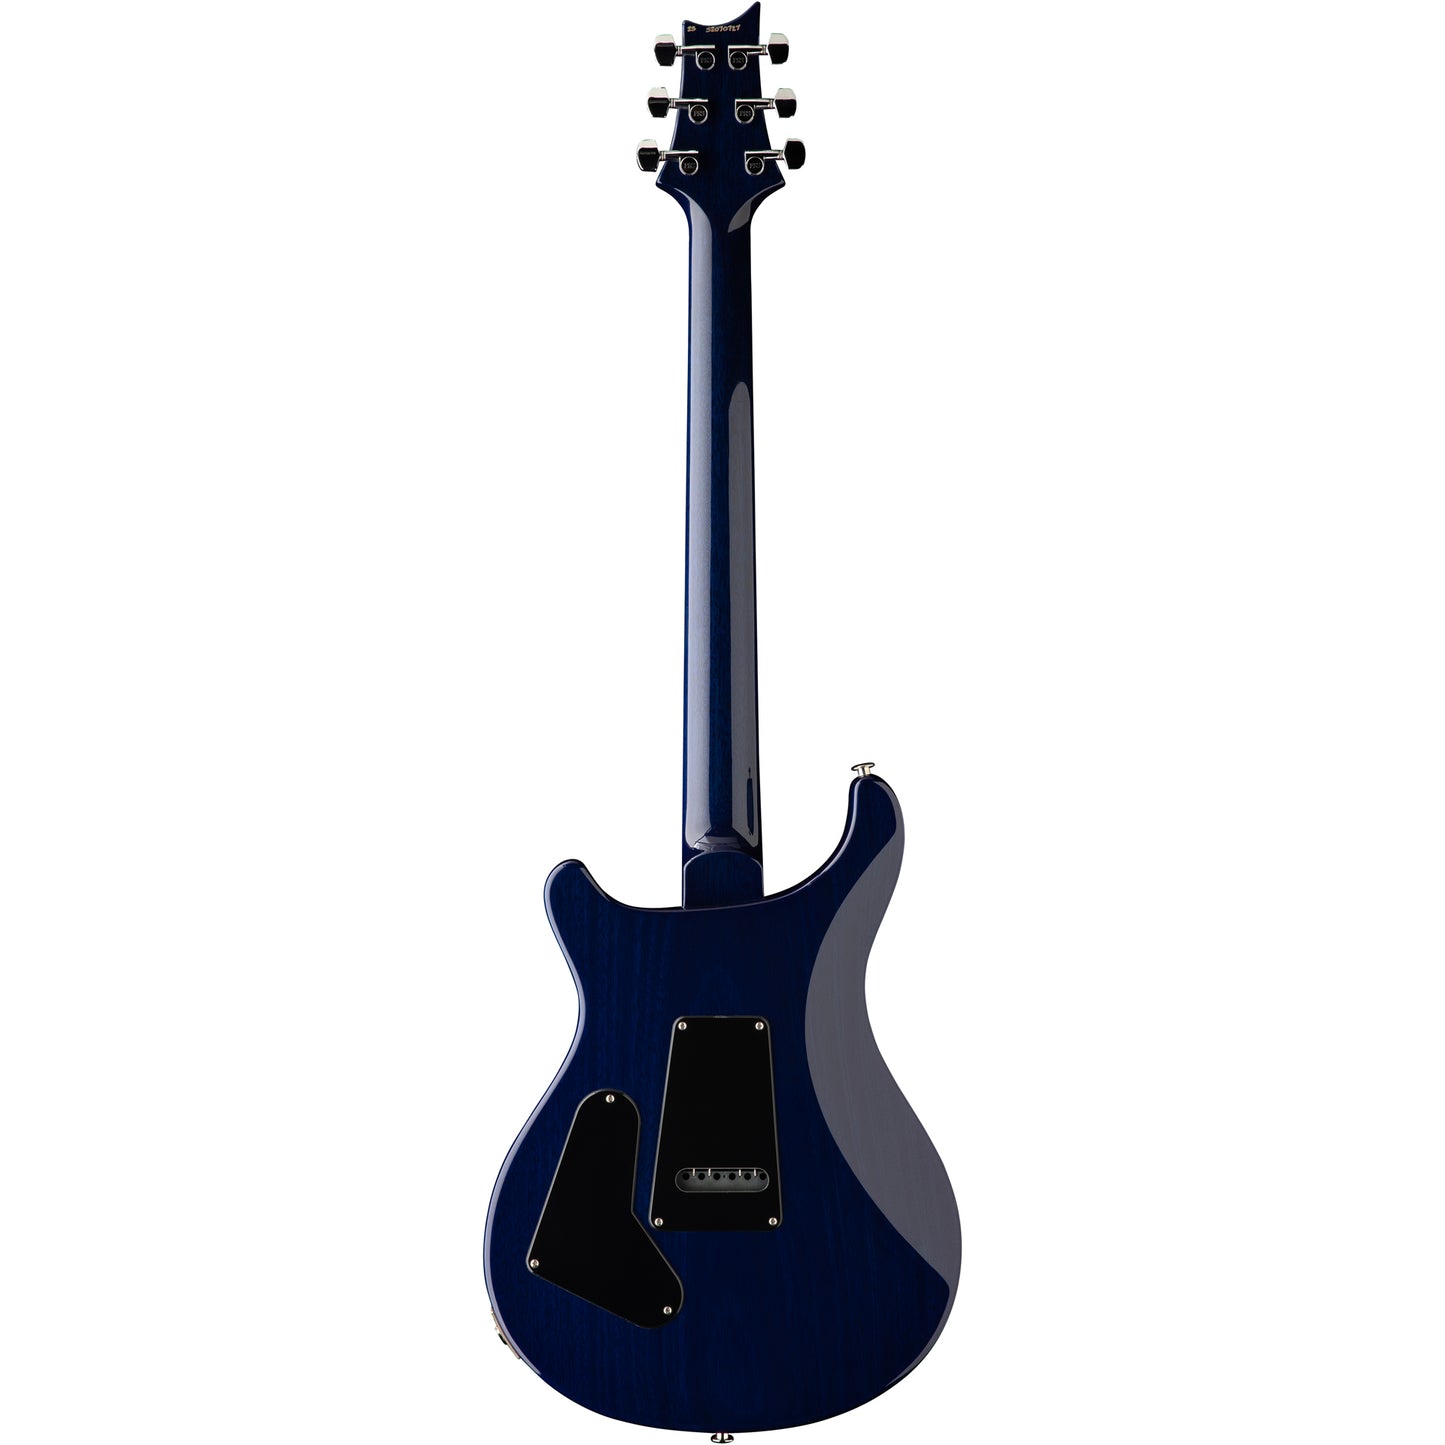 PRS S2 Custom 24 Flame Top Electric Guitar - Faded Gray Black Blue Burst